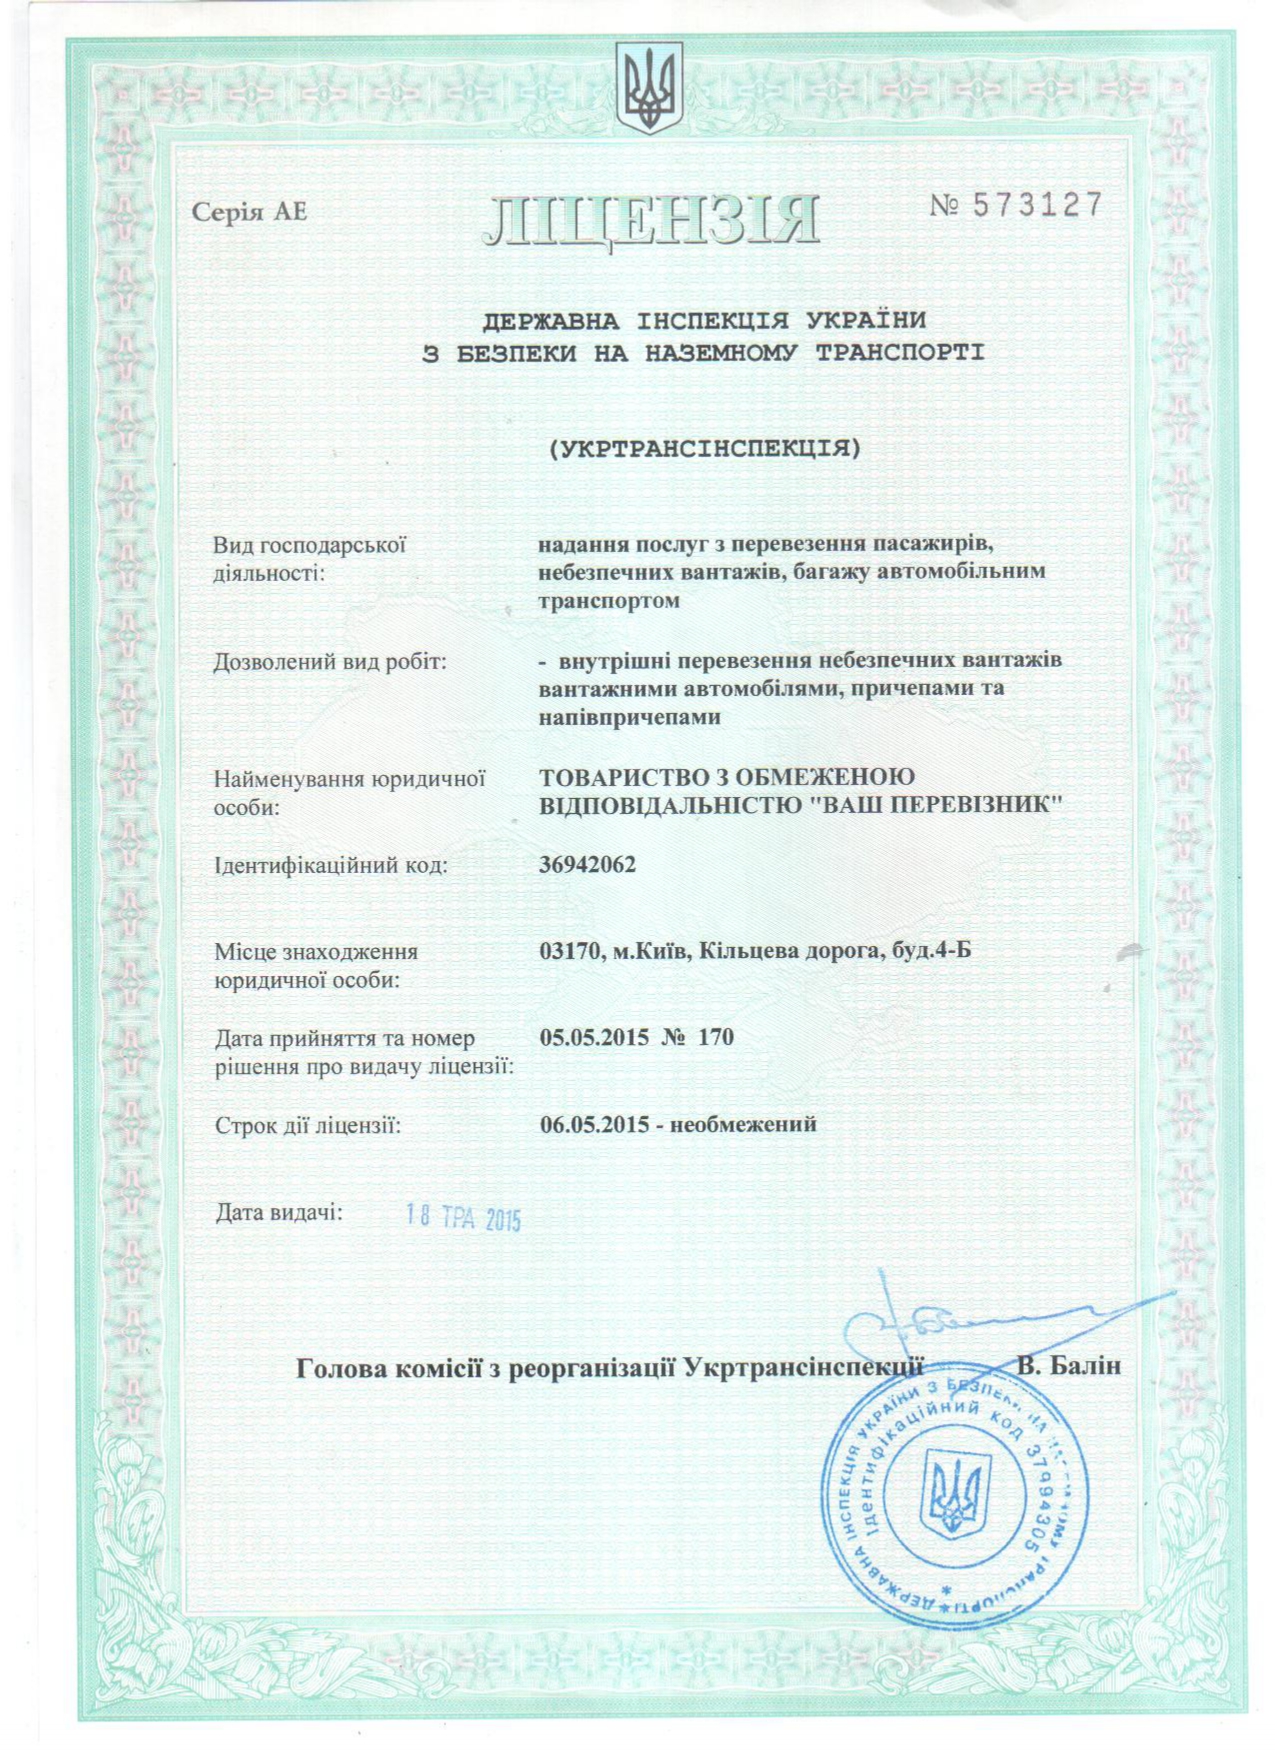 license - Сертификаты компании